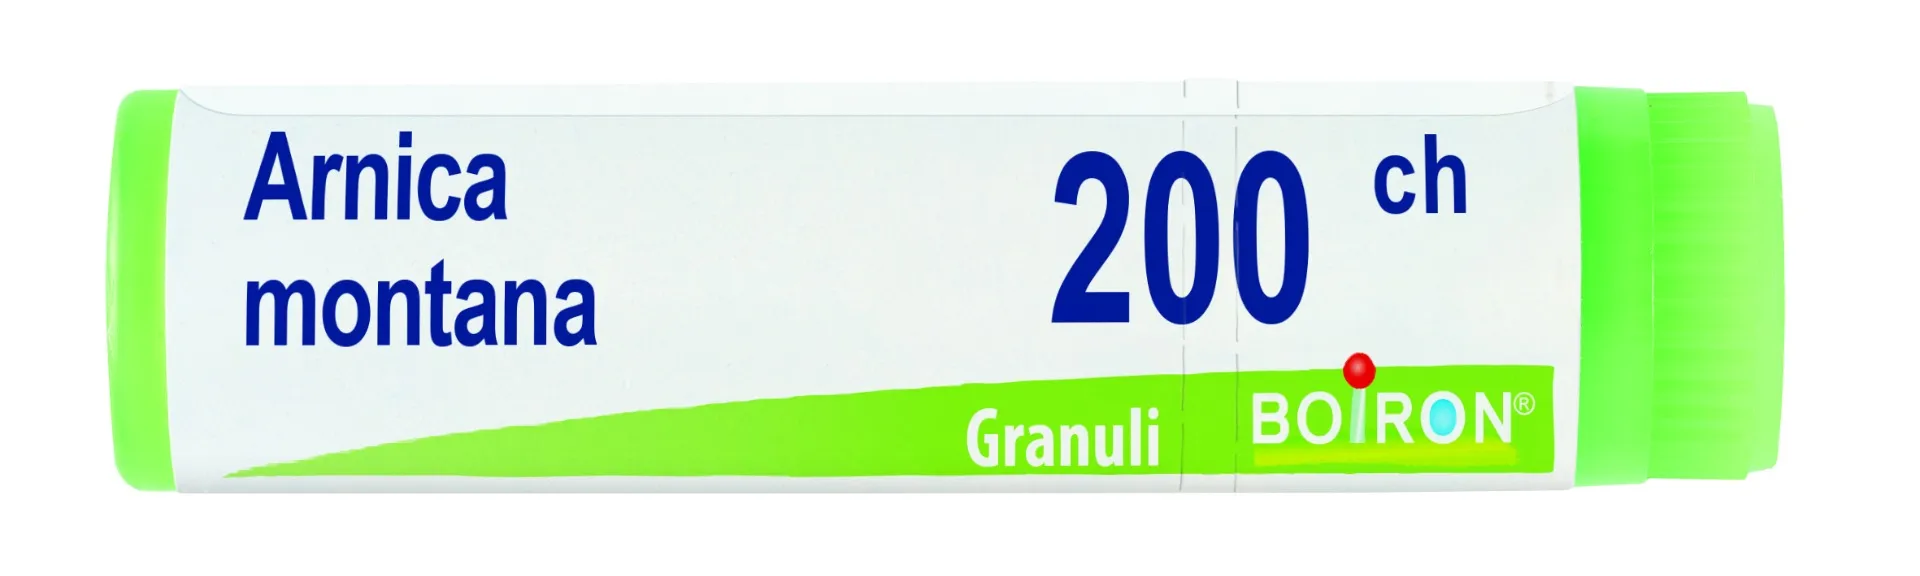 ARNICA MONTANA 200 CH gr 1G GRANULI